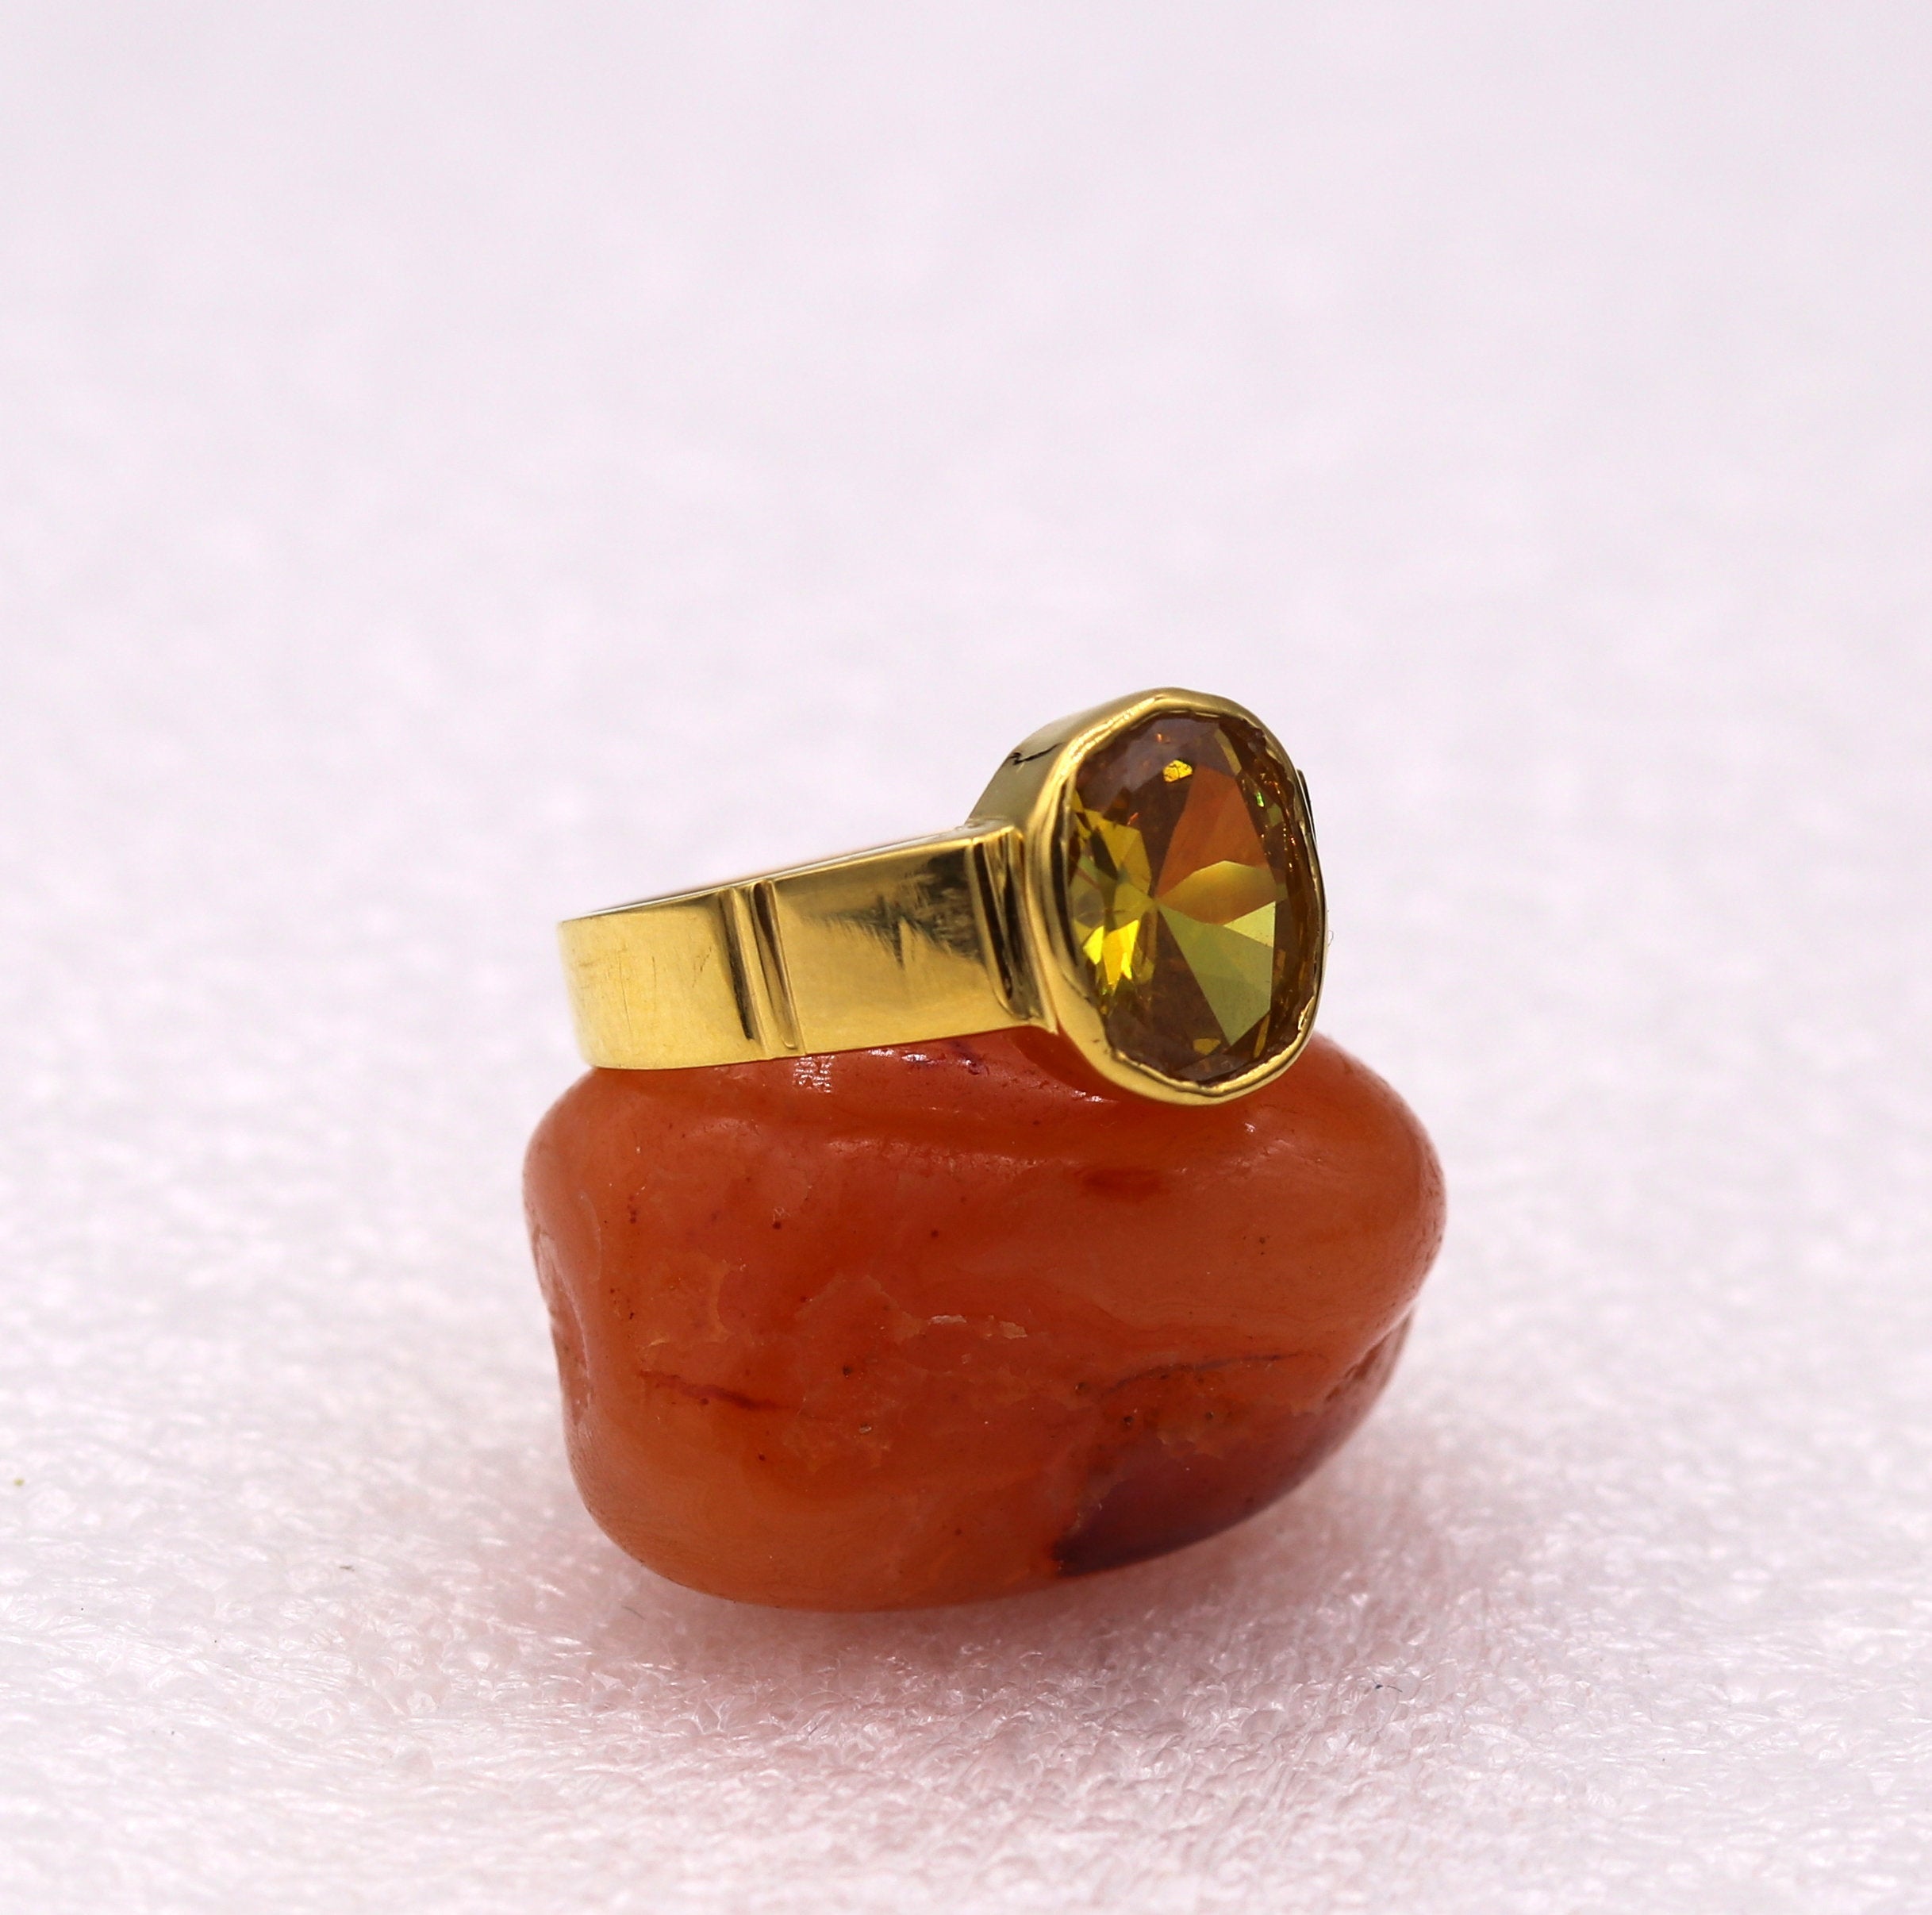 Buy S Kumar Gems & Jewels 9.25 Ratti Citirne Stone Stone Shining Sunela  Gemstone Gold Plated Panchdhatu Ring for Men and Women at Amazon.in